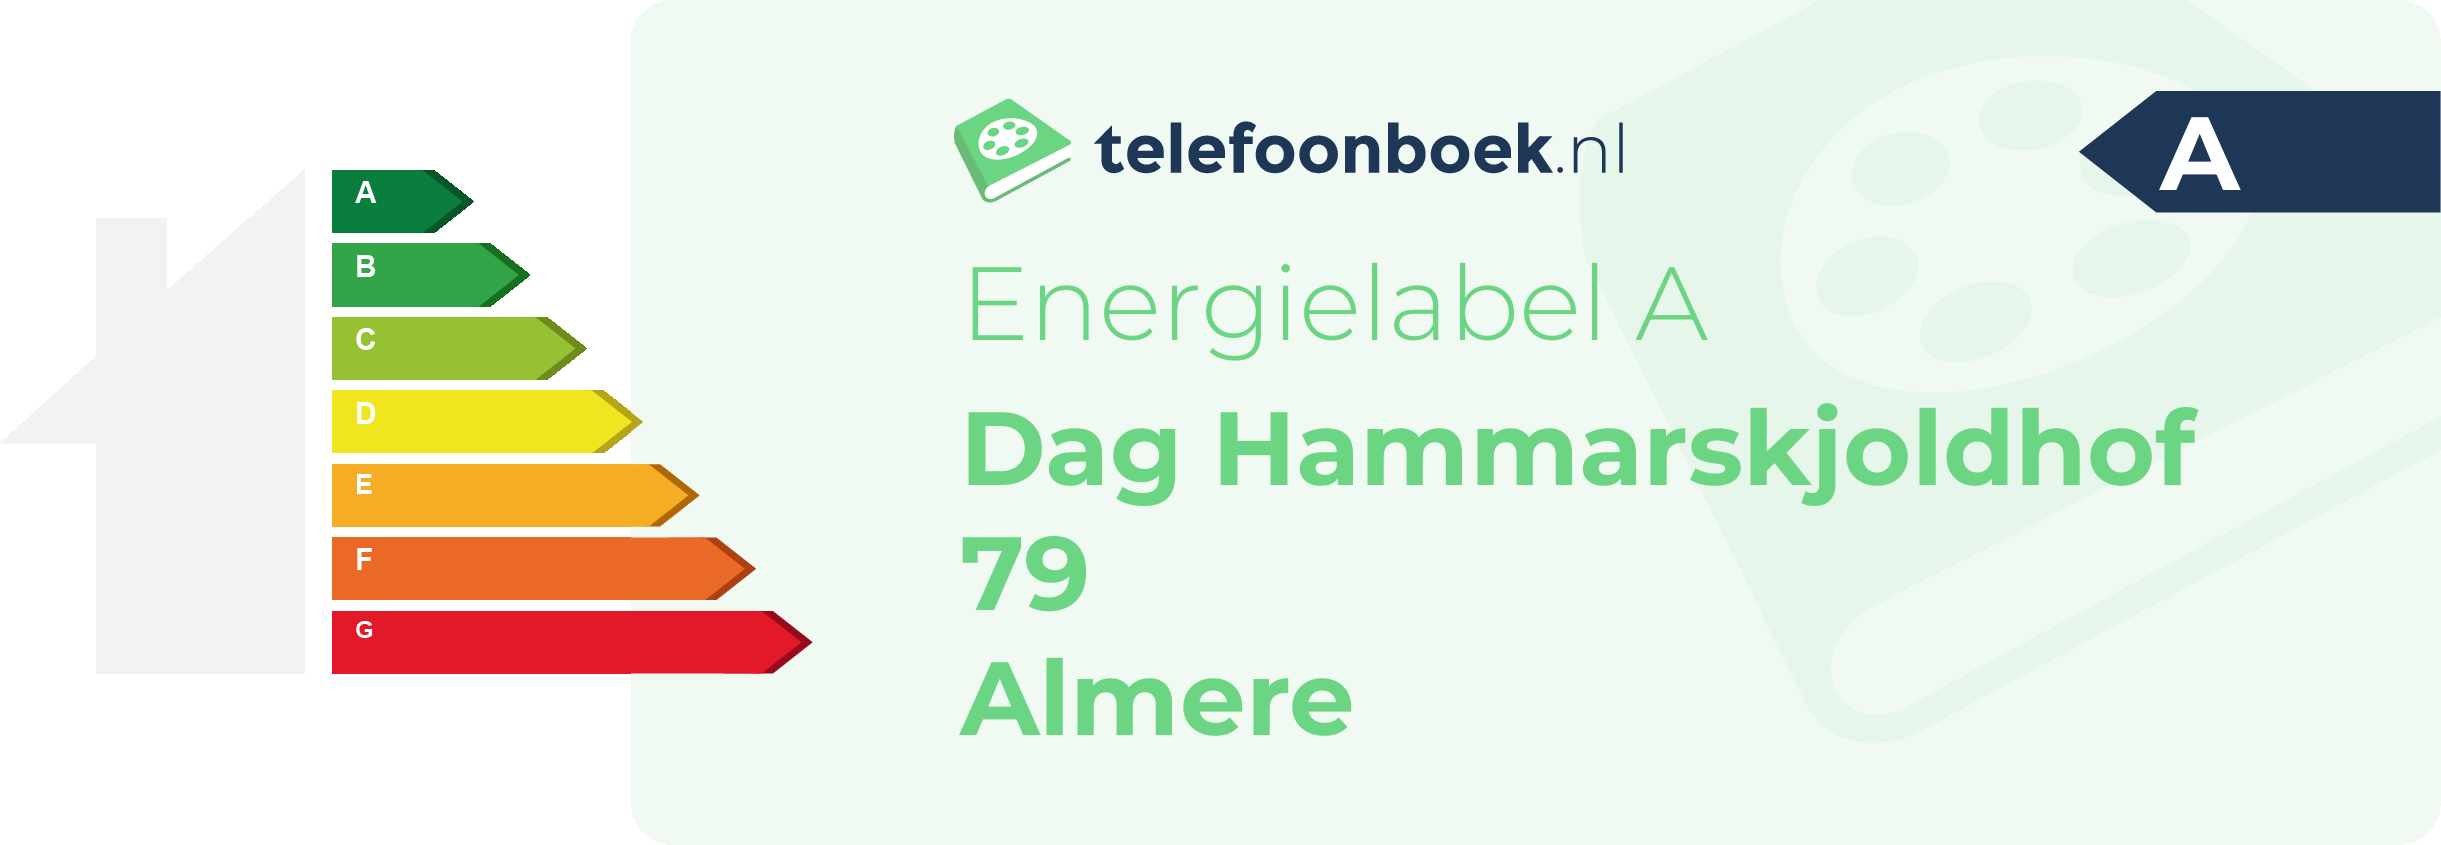 Energielabel Dag Hammarskjoldhof 79 Almere